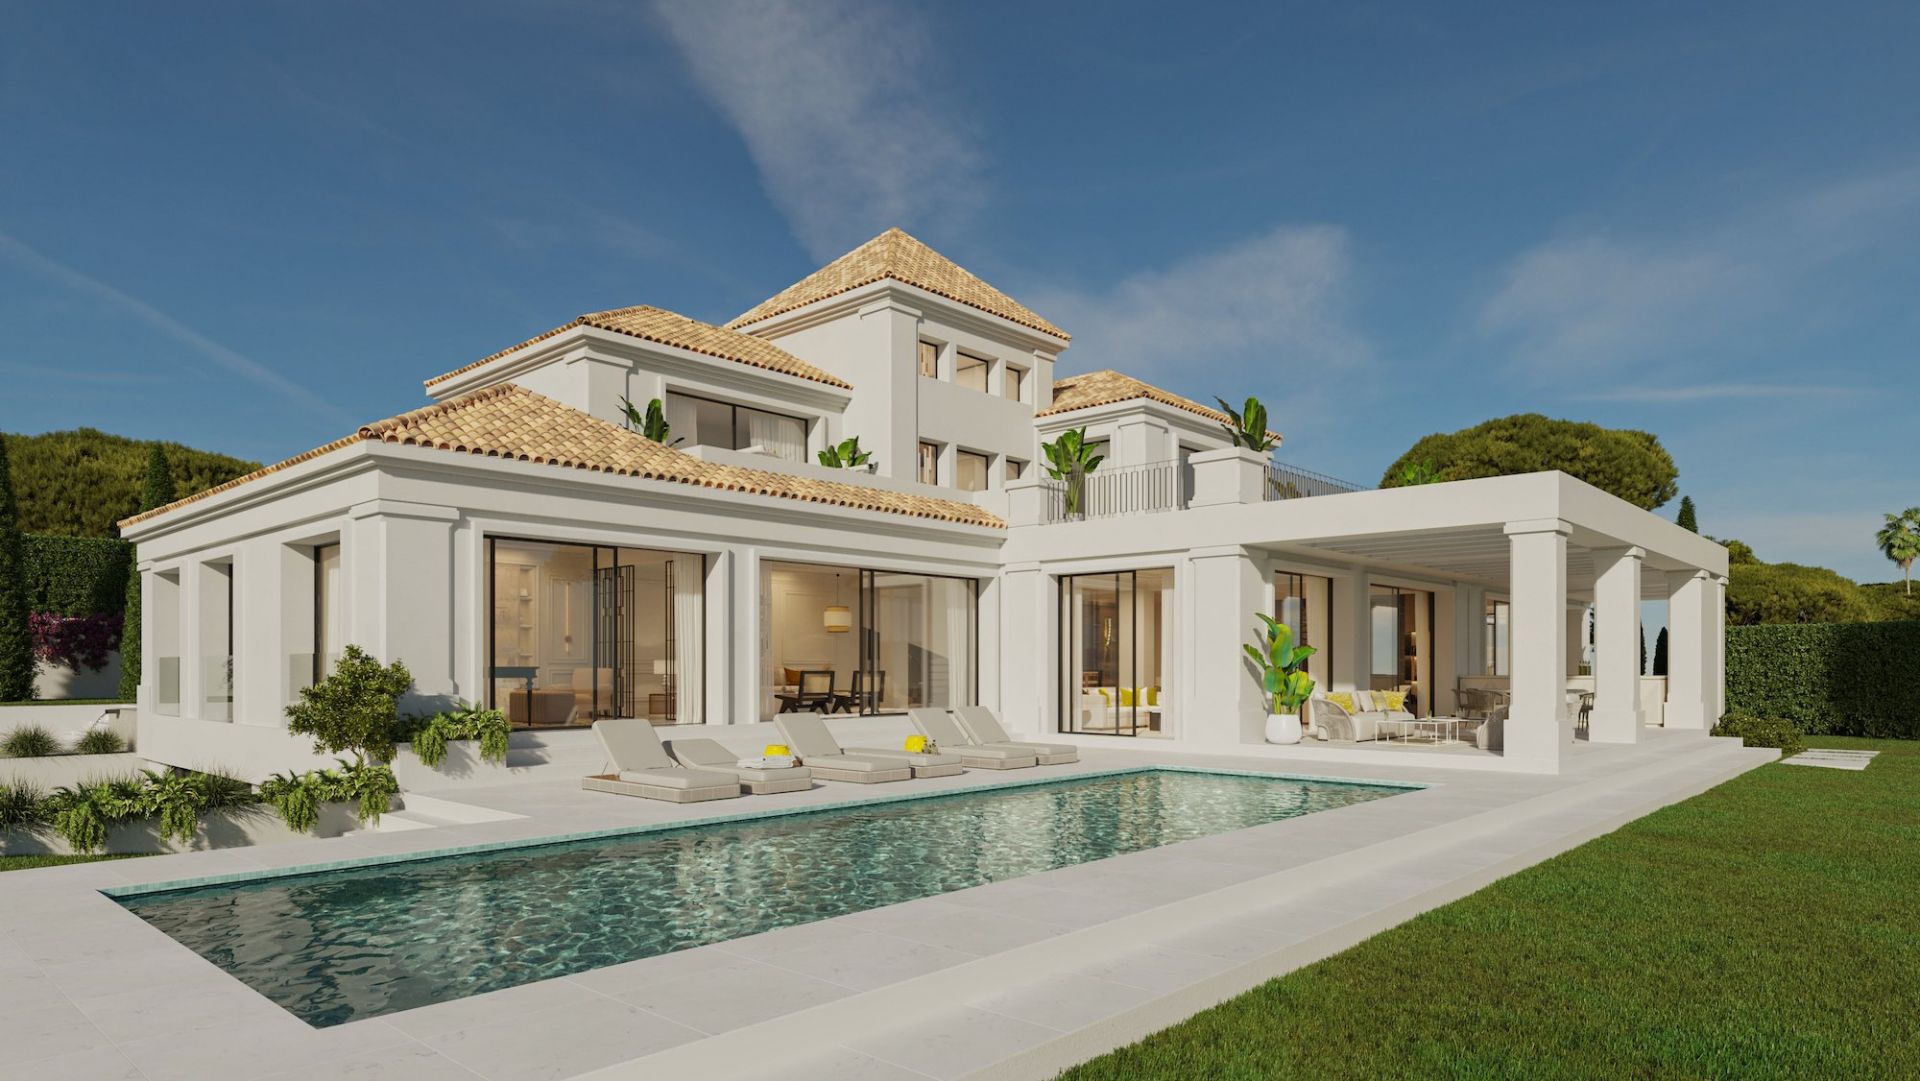 Ideally located family home in Golf Valley | Engel & Völkers Marbella